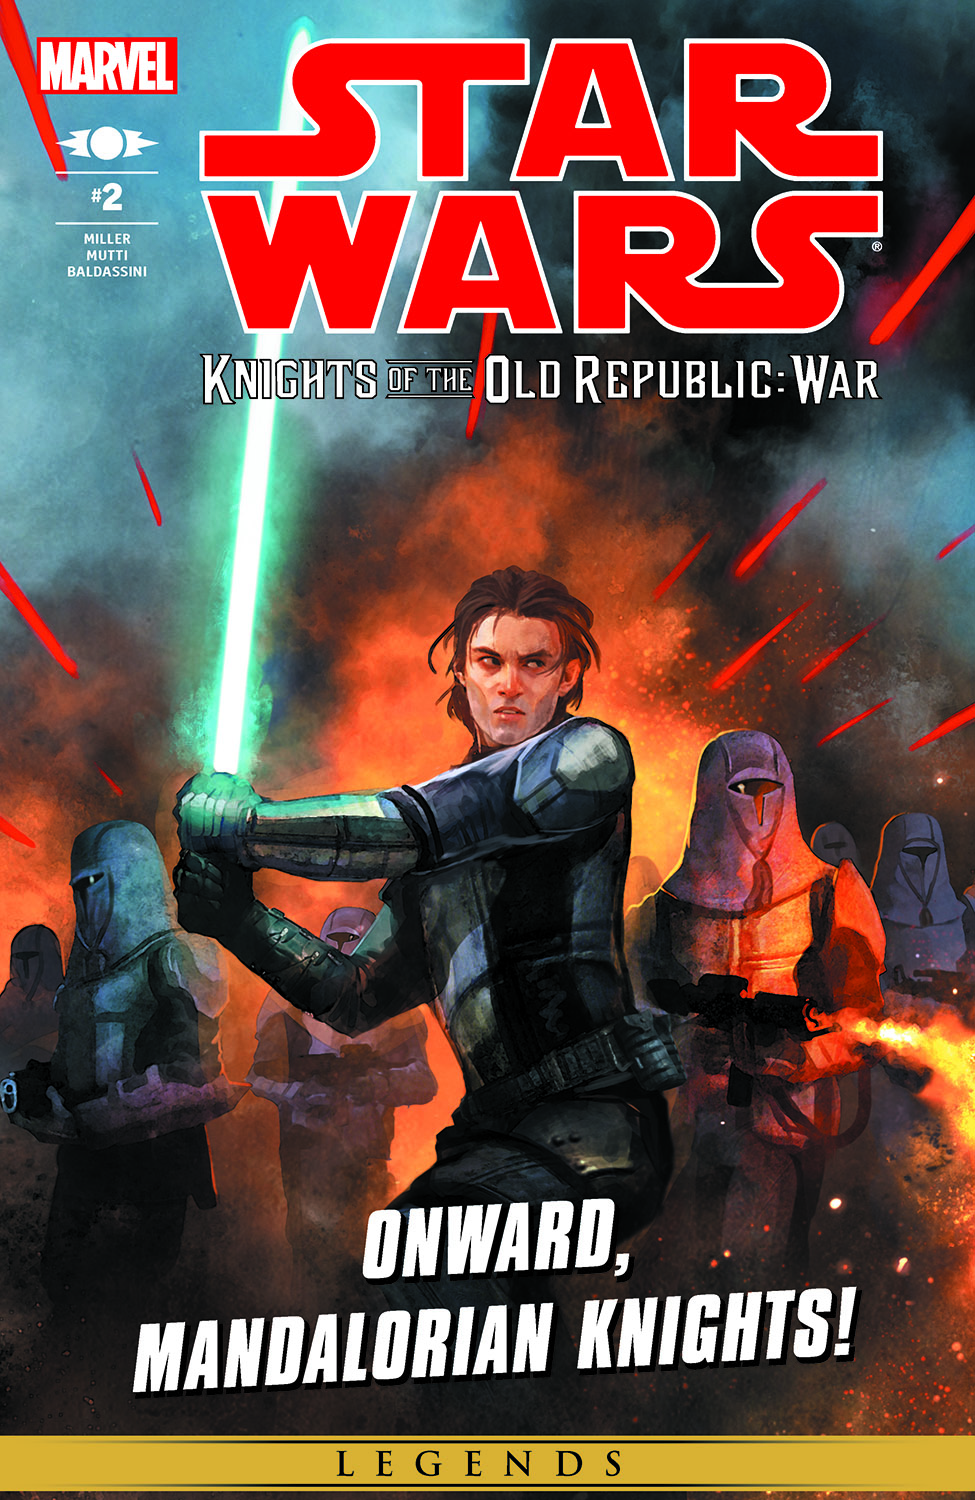 Star Wars: Knights of the Old Republic - War (2012) #2